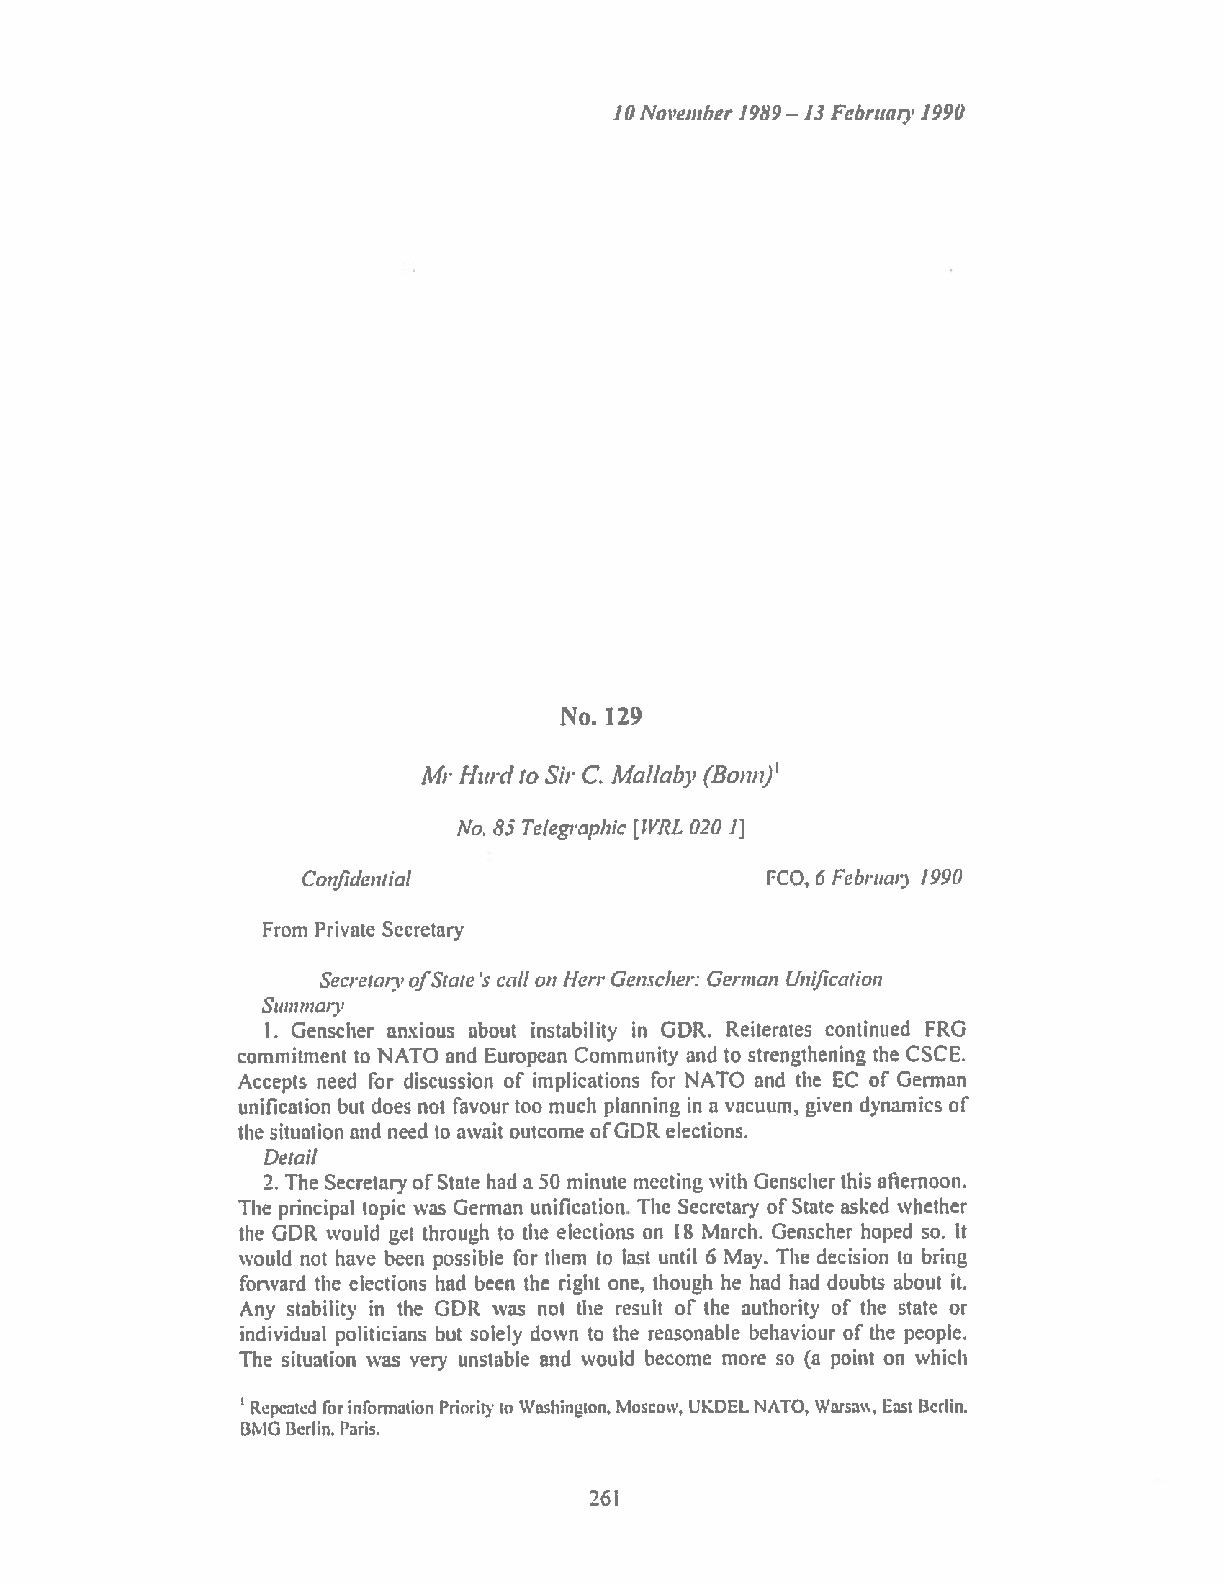 Document-02-Mr-Hurd-to-Sir-C-Mallaby-Bonn